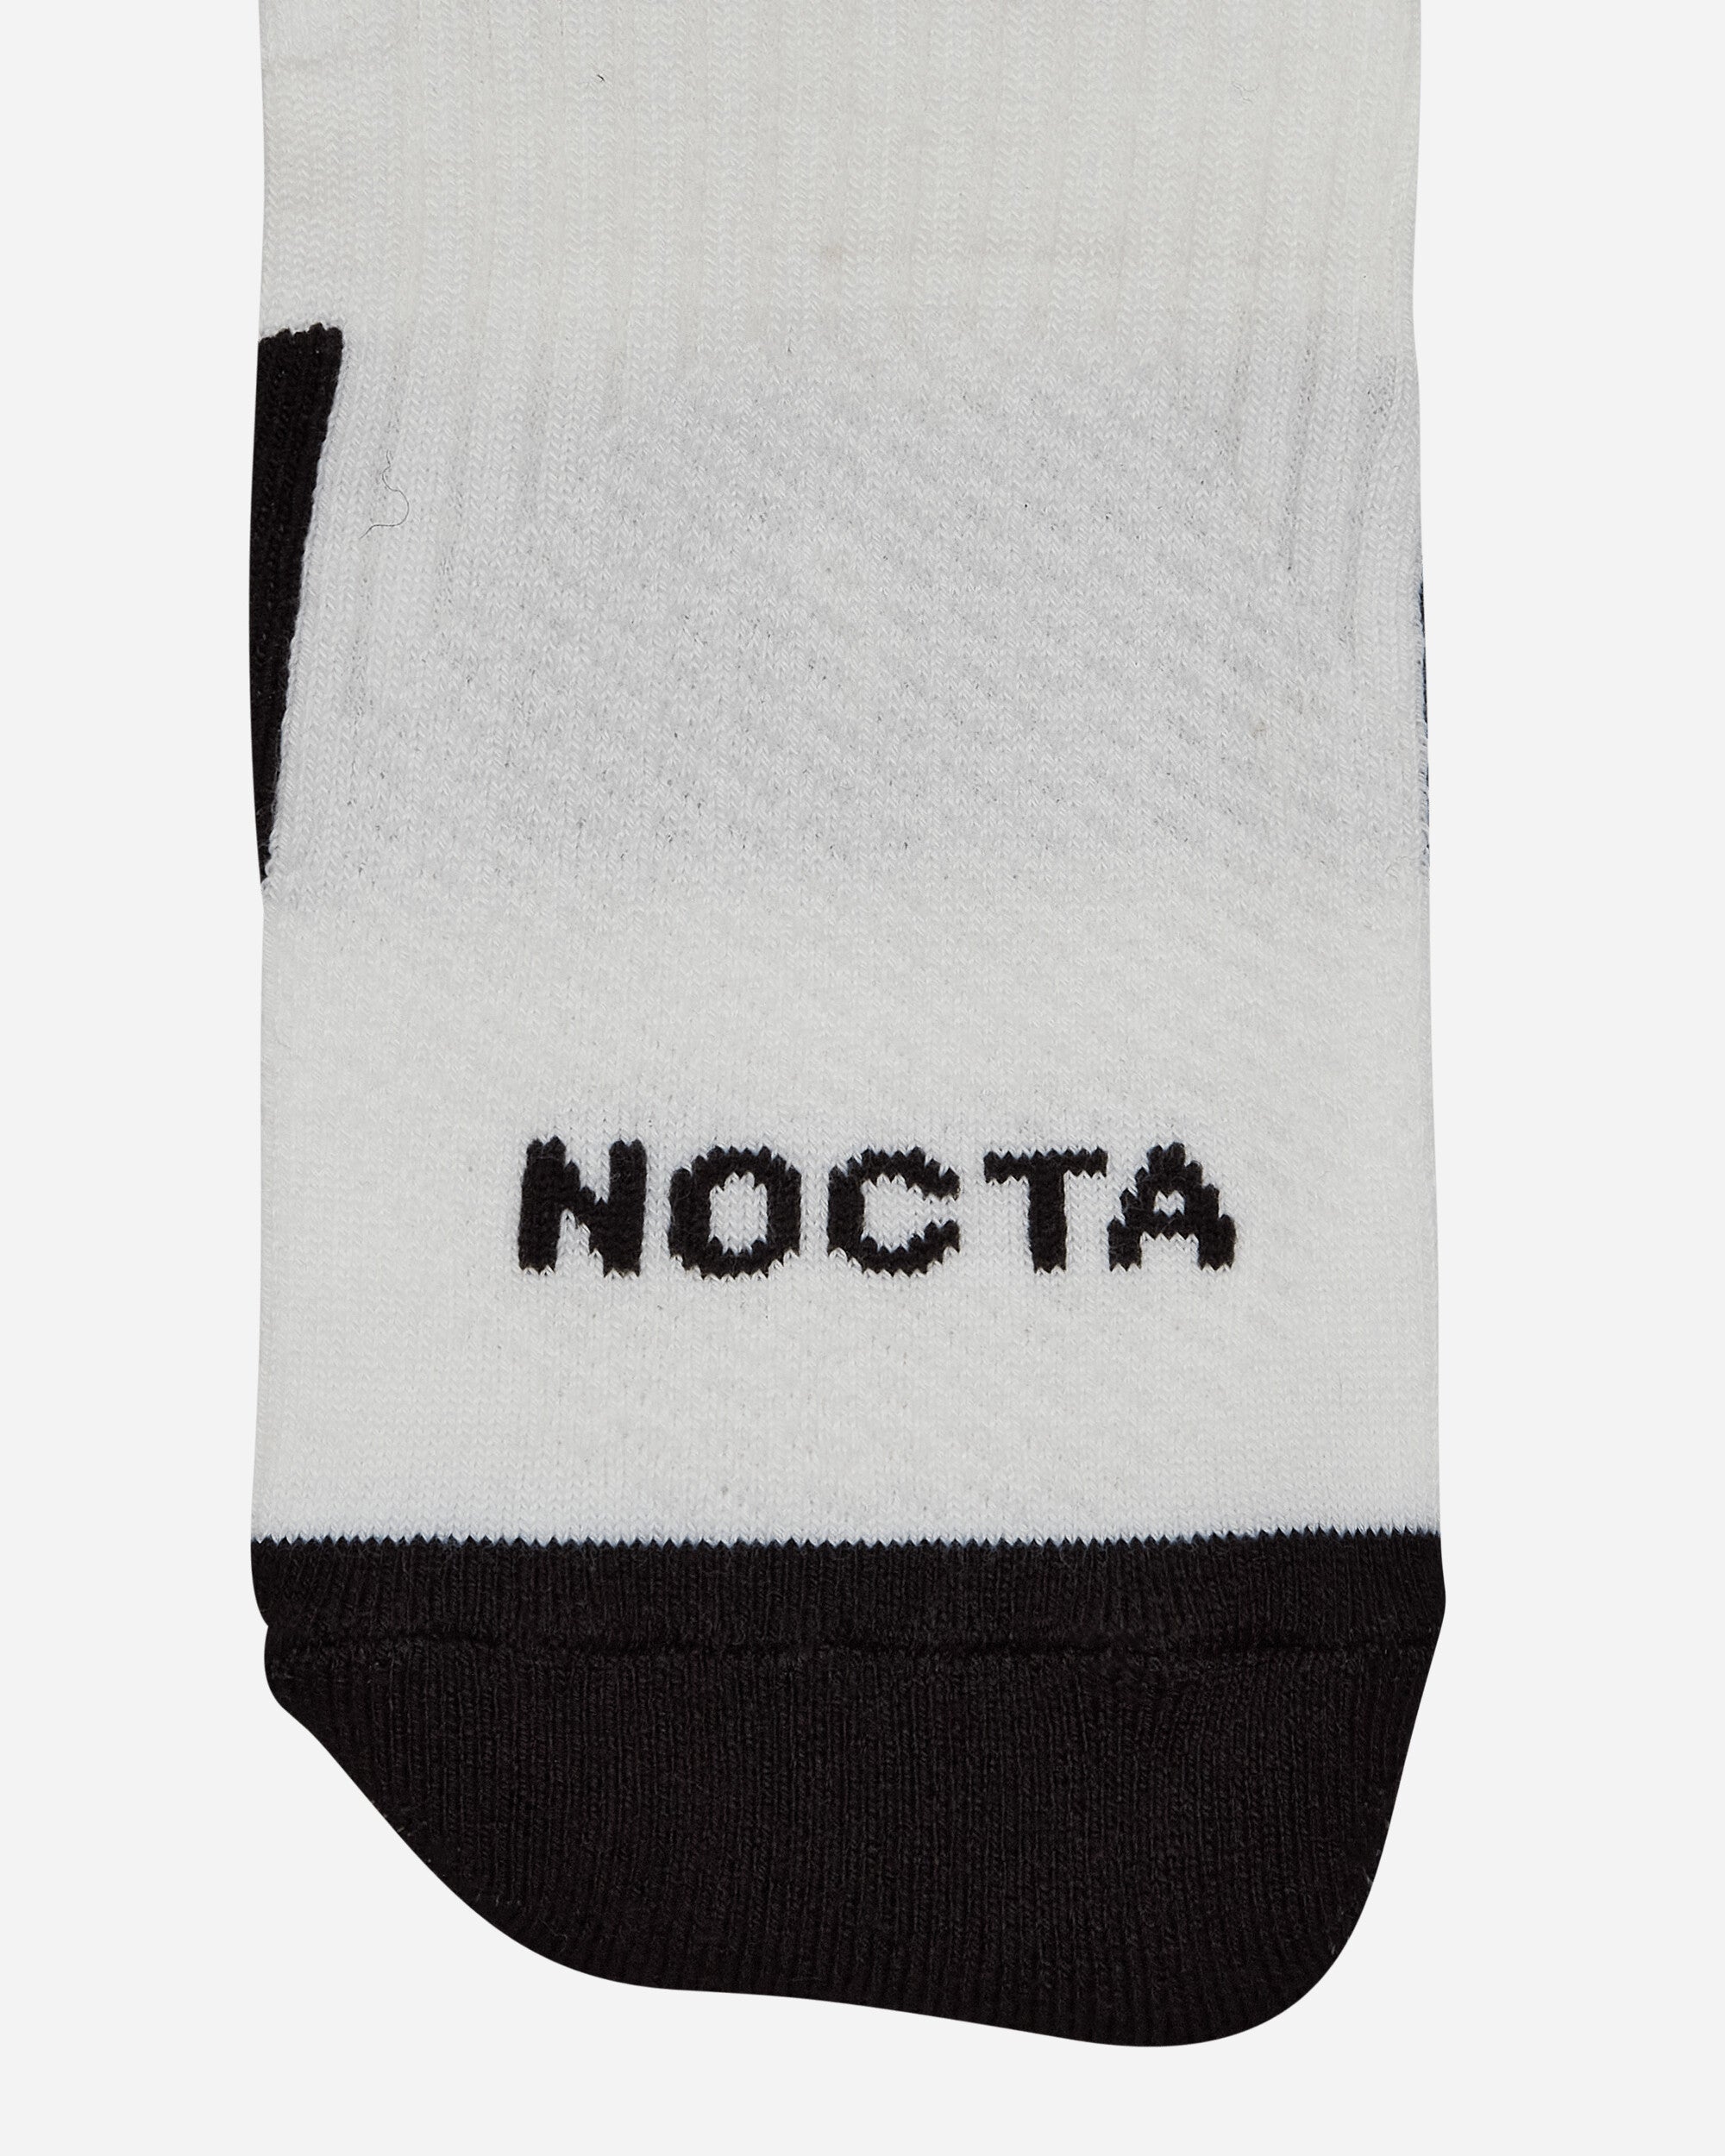 Nike U Snkr Sox Crw 3Pr Nocta Lart Multi-Color Underwear Socks FV3806-900